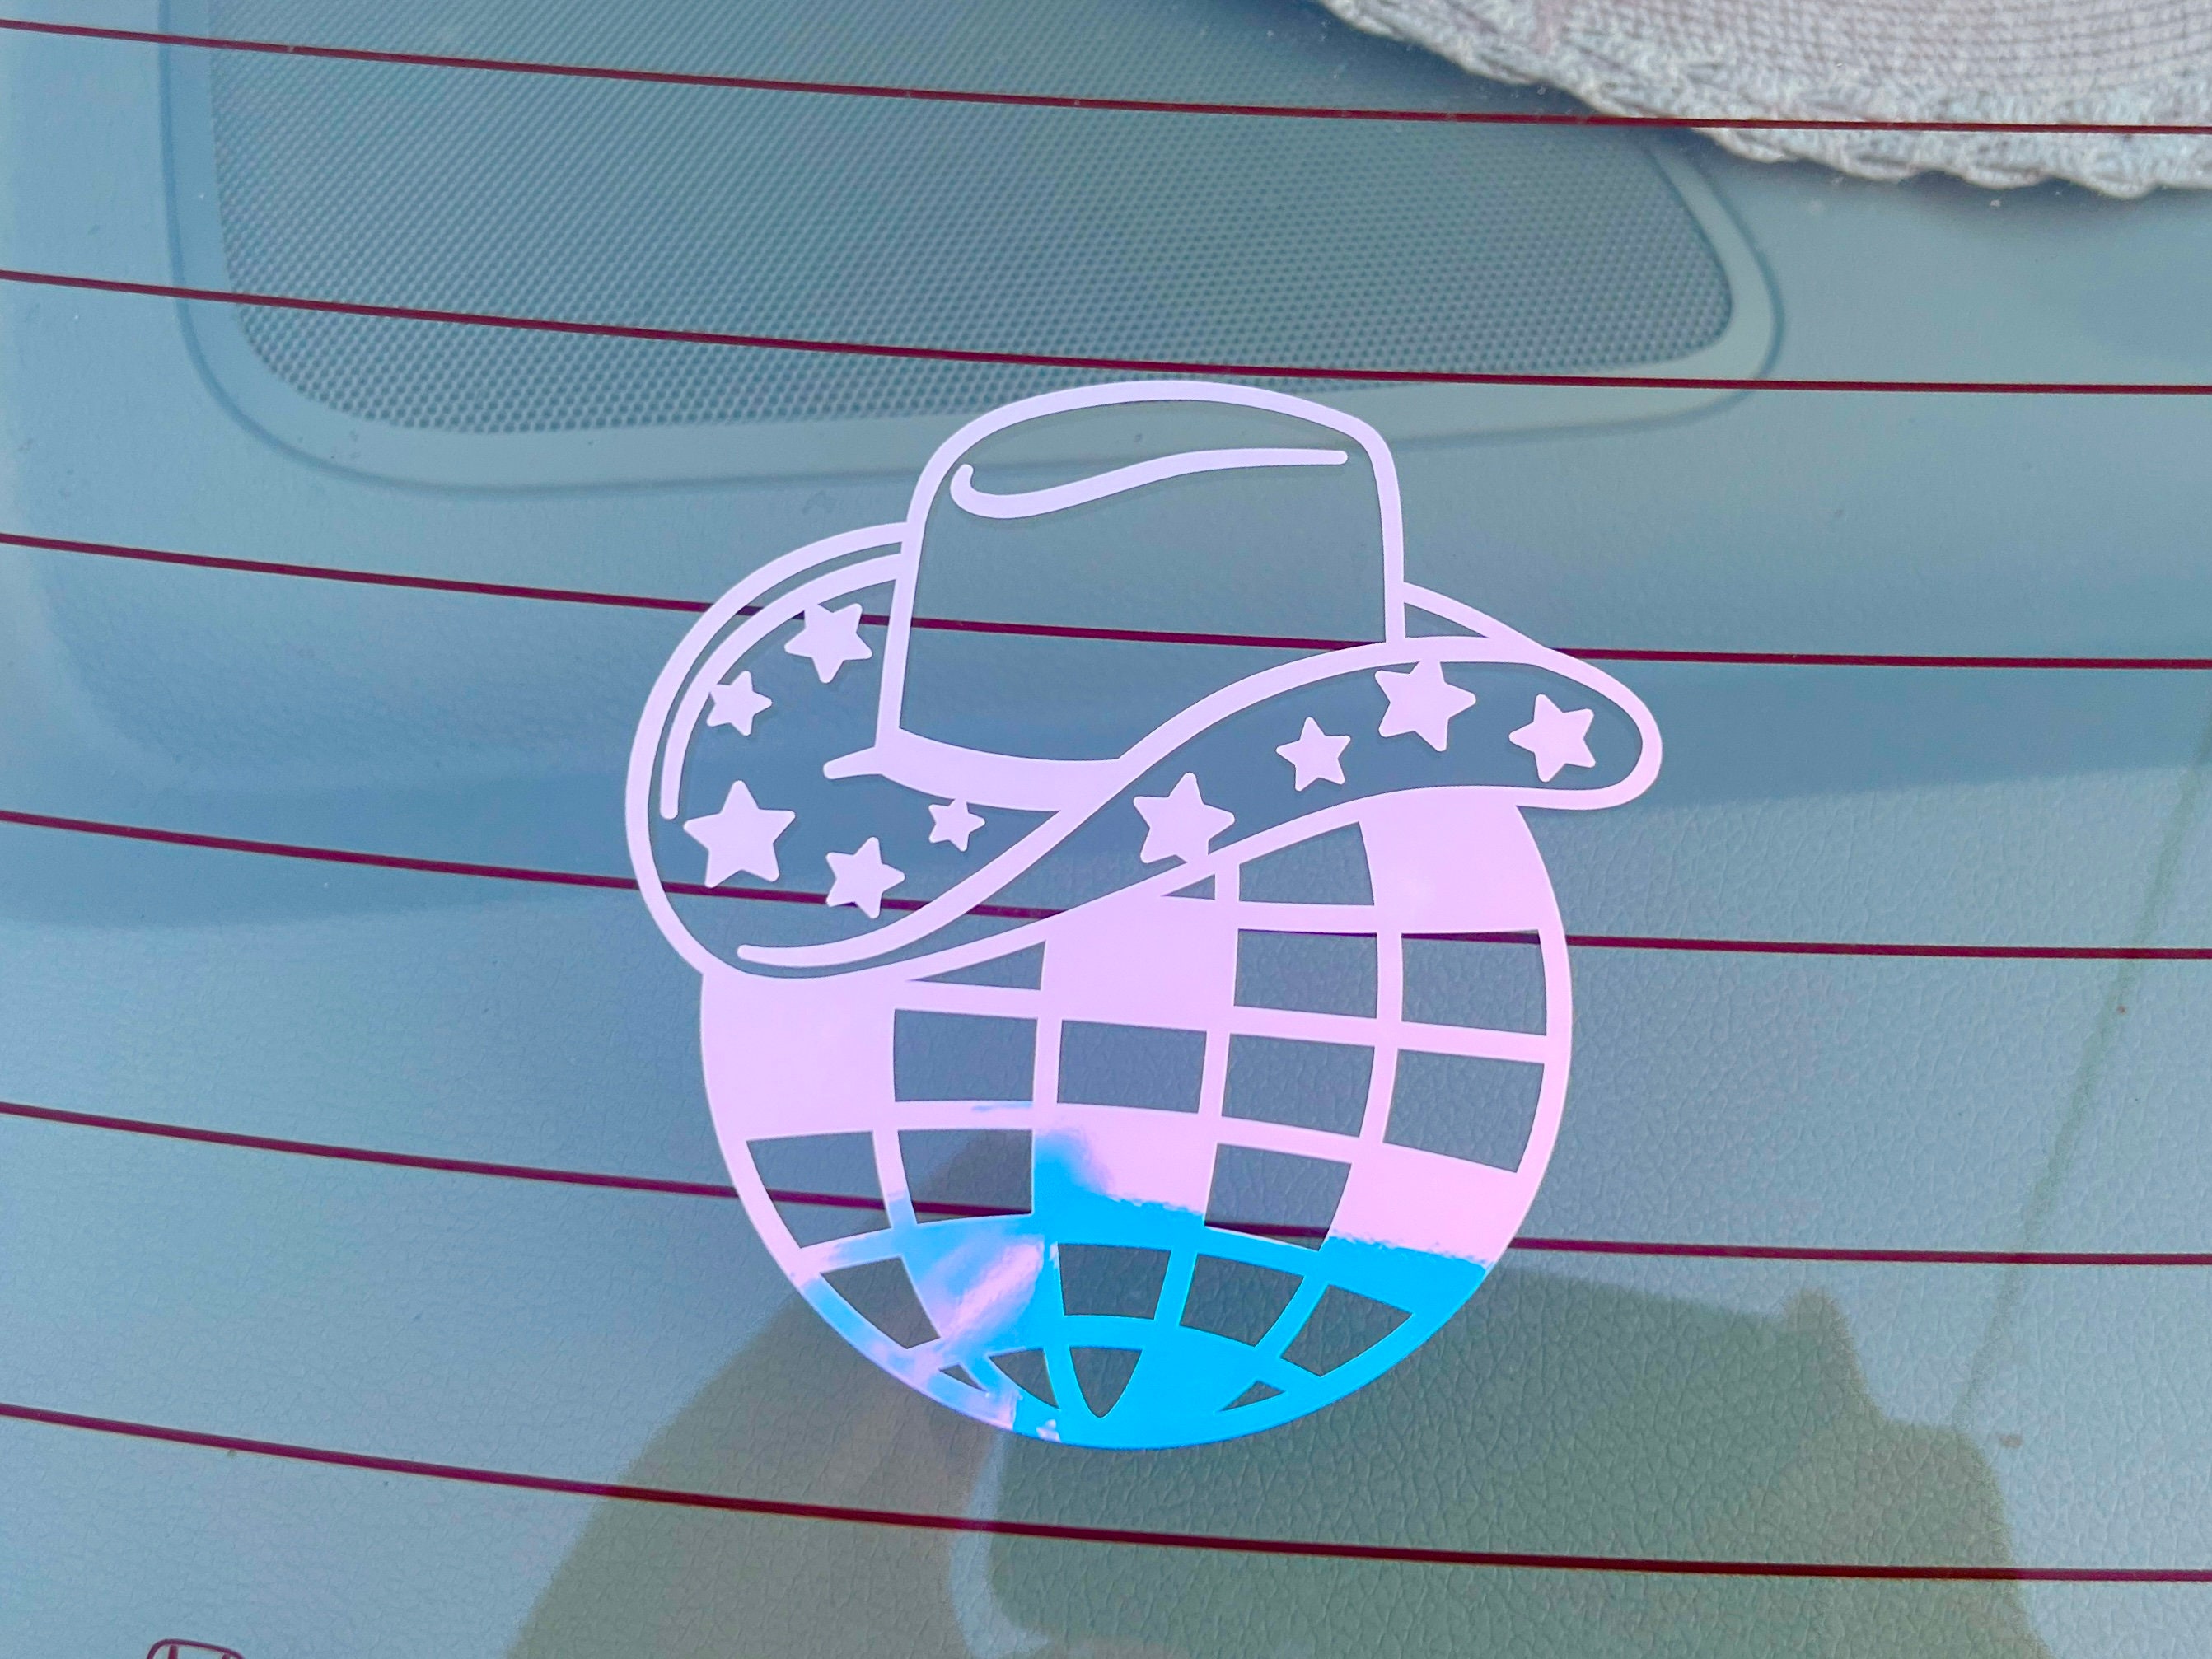 Western Design Disco Stickers